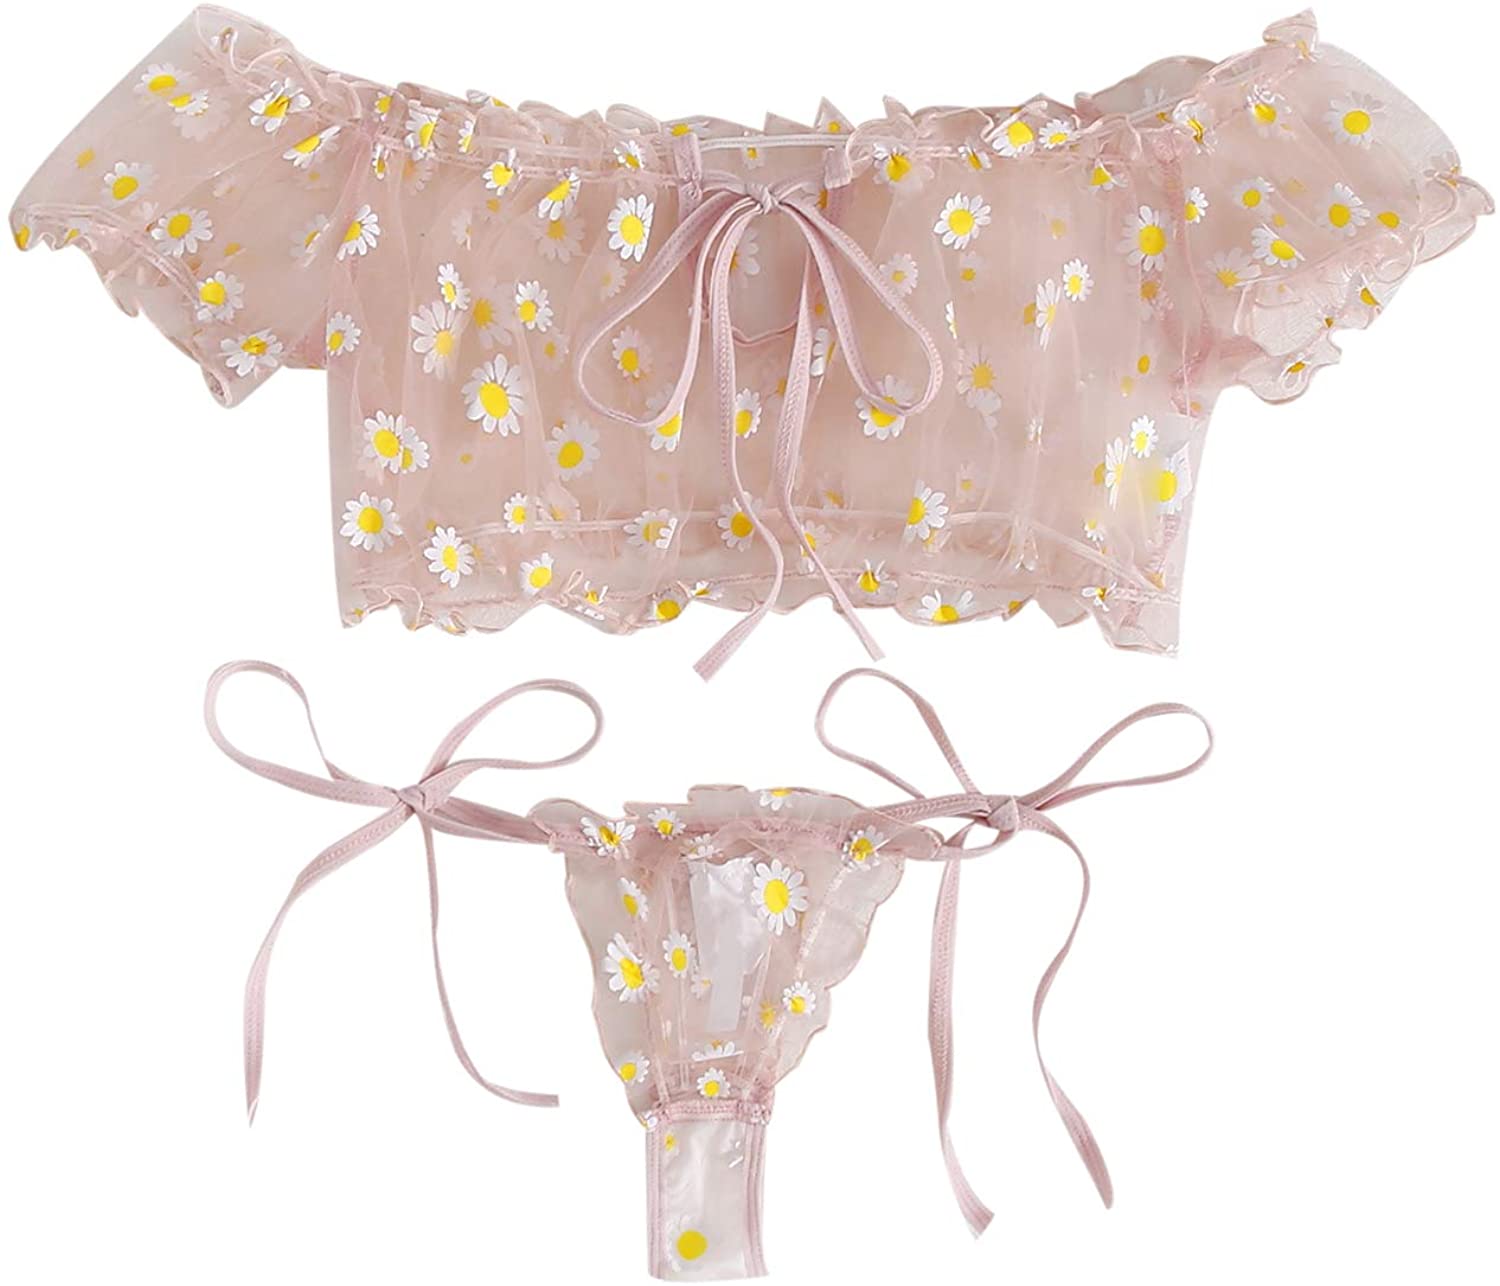 Price:$17.99    SheIn Women's Self Tie Daisy Floral Frill Trim Bardot Mesh Lingerie Set Sexy Pink Medium  Clothing